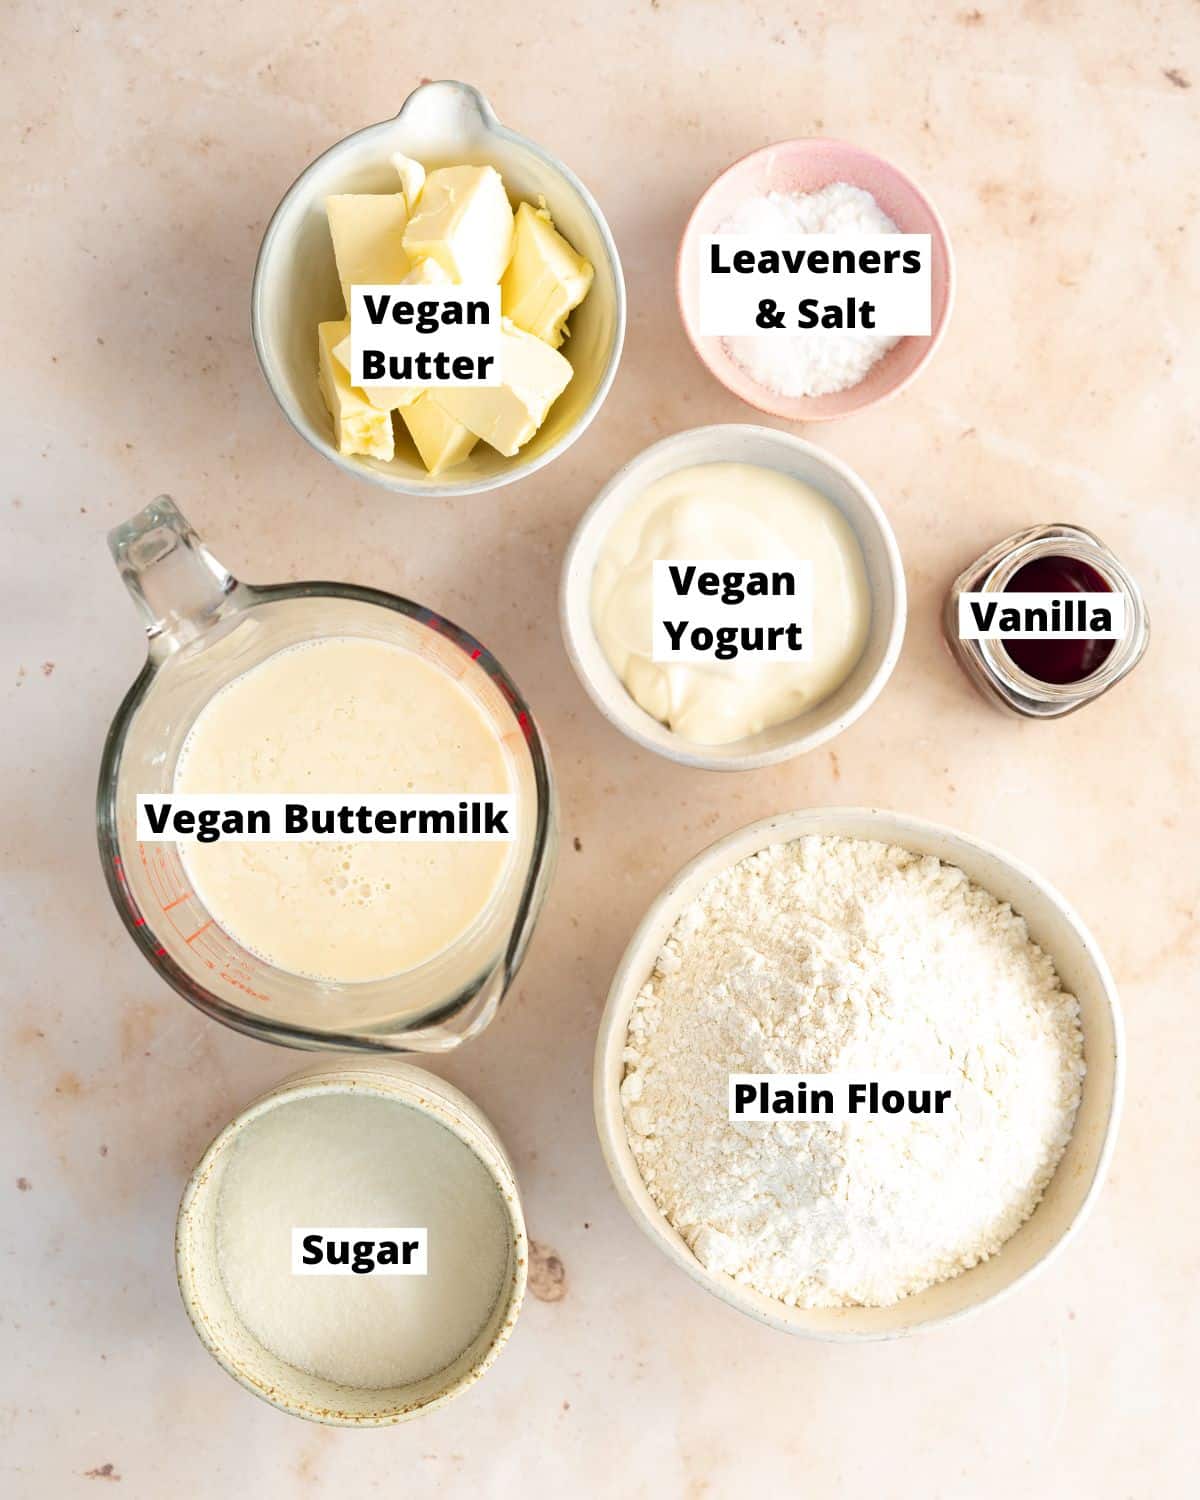 ingredients to make vegan cupcakes measured out in bowls.